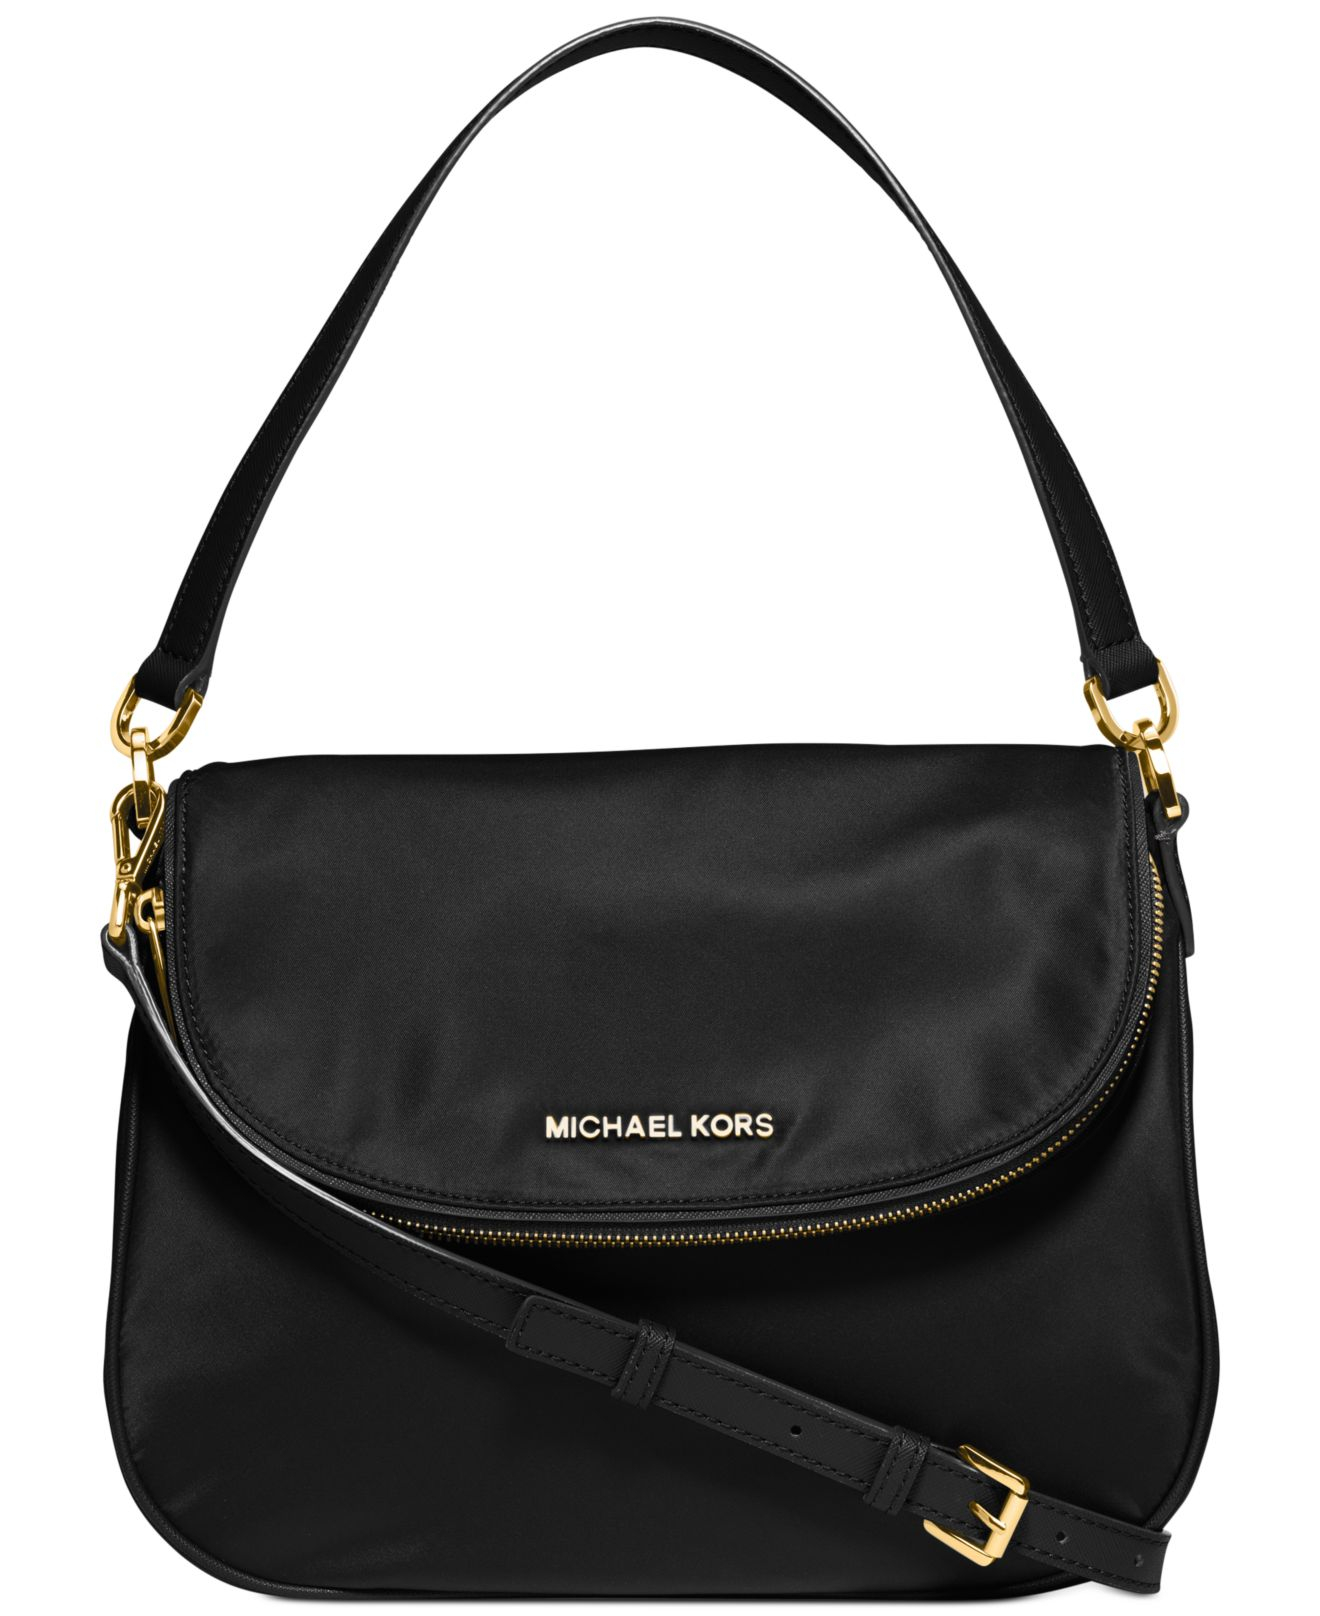 Macys Michael Kors Handbag Return Policy | semashow.com